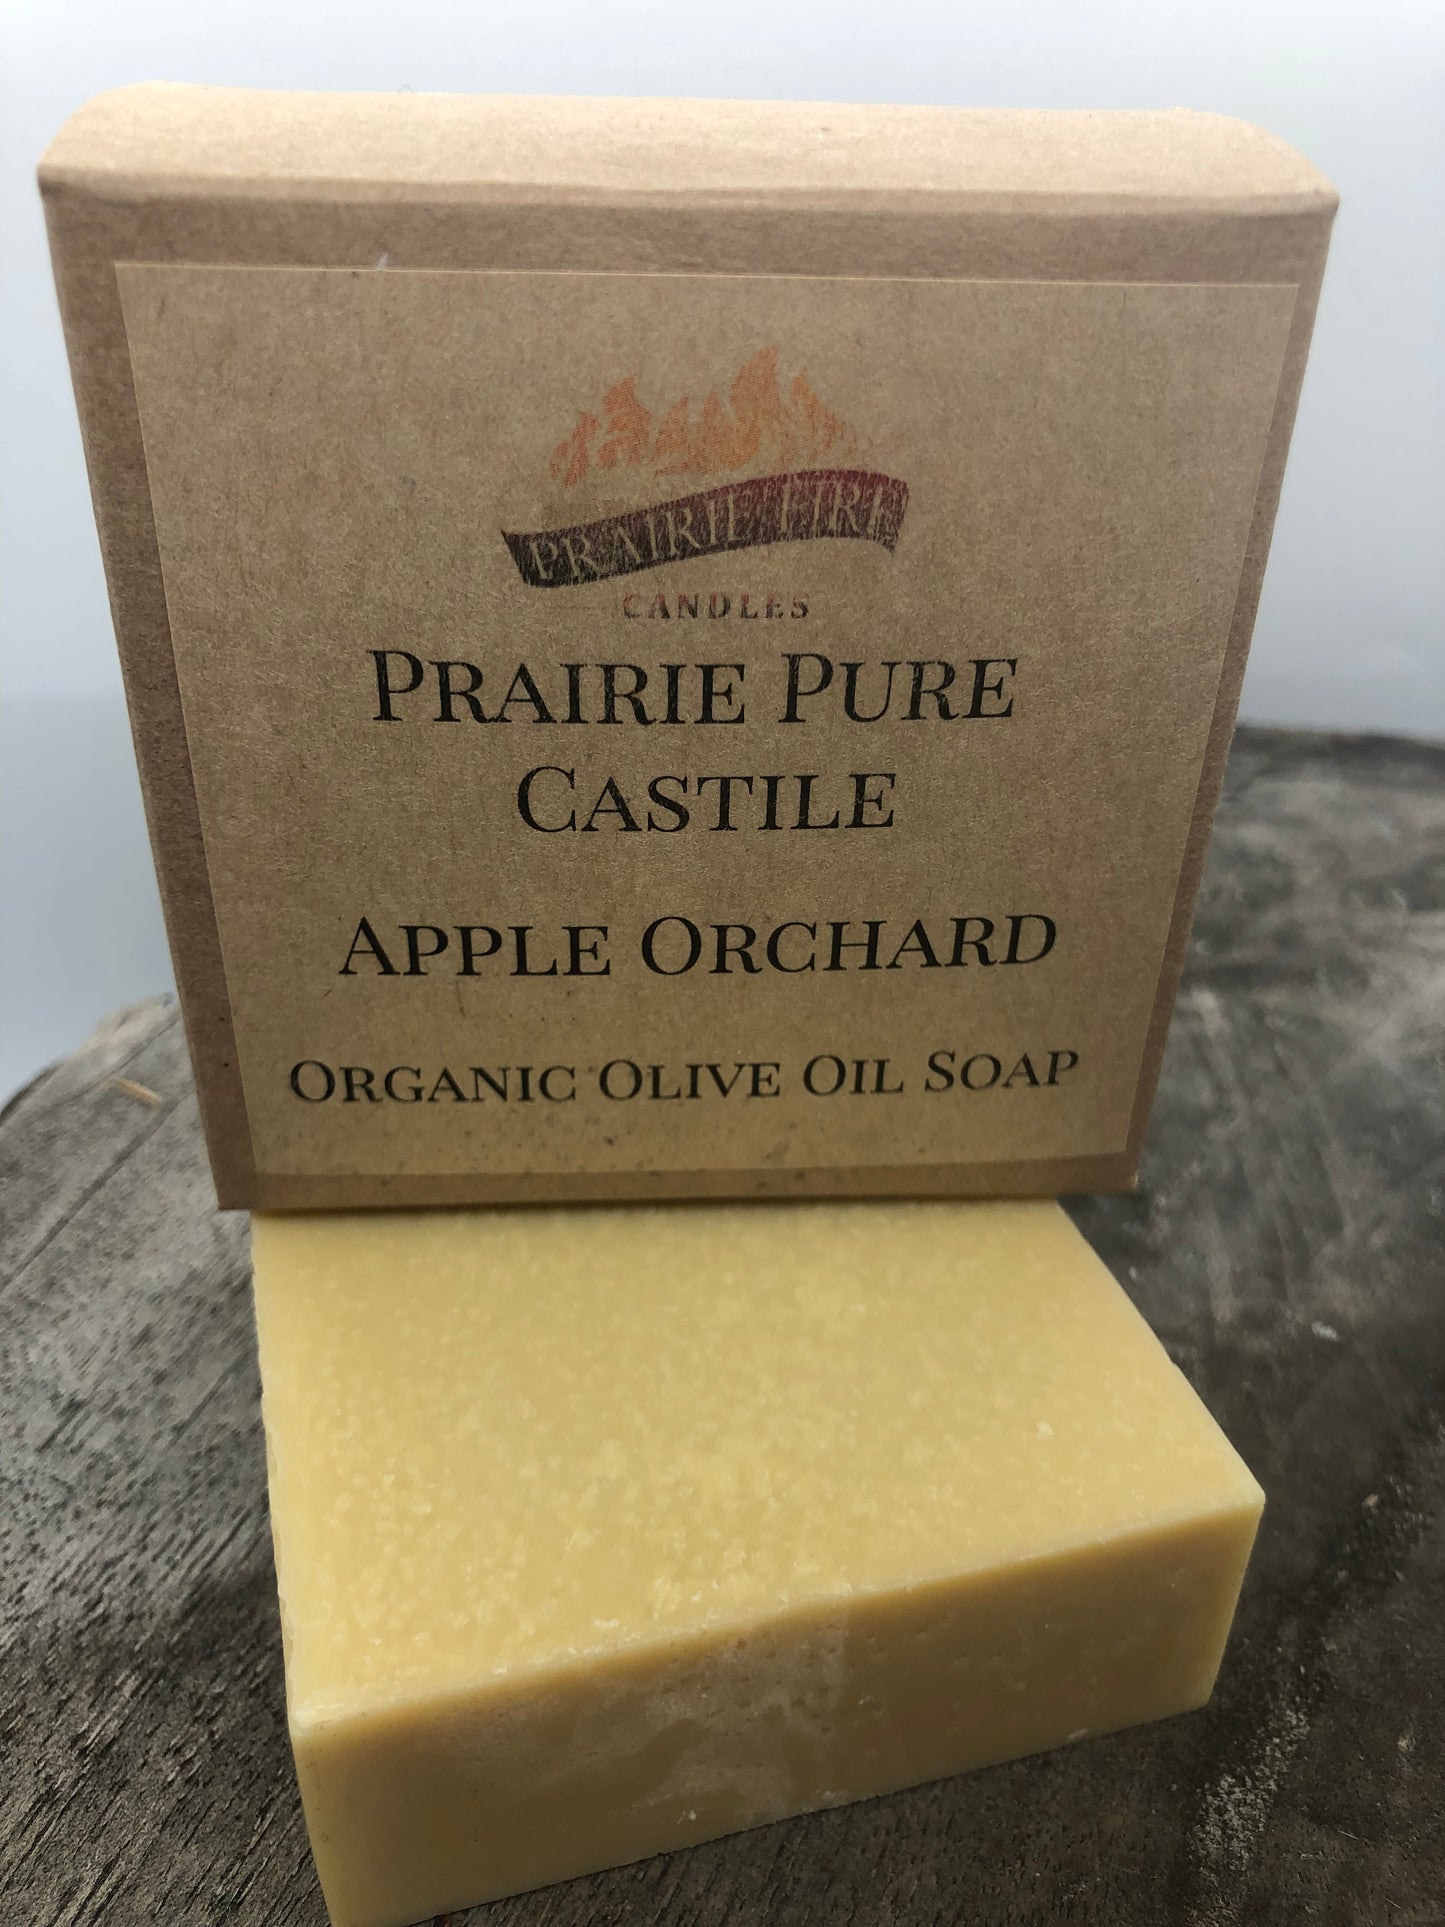 Apple Orchard Real Castile Organic Olive Oil Soap for Sensitive Skin - Dye Free - 100% Certified Organic Extra Virgin Olive Oil